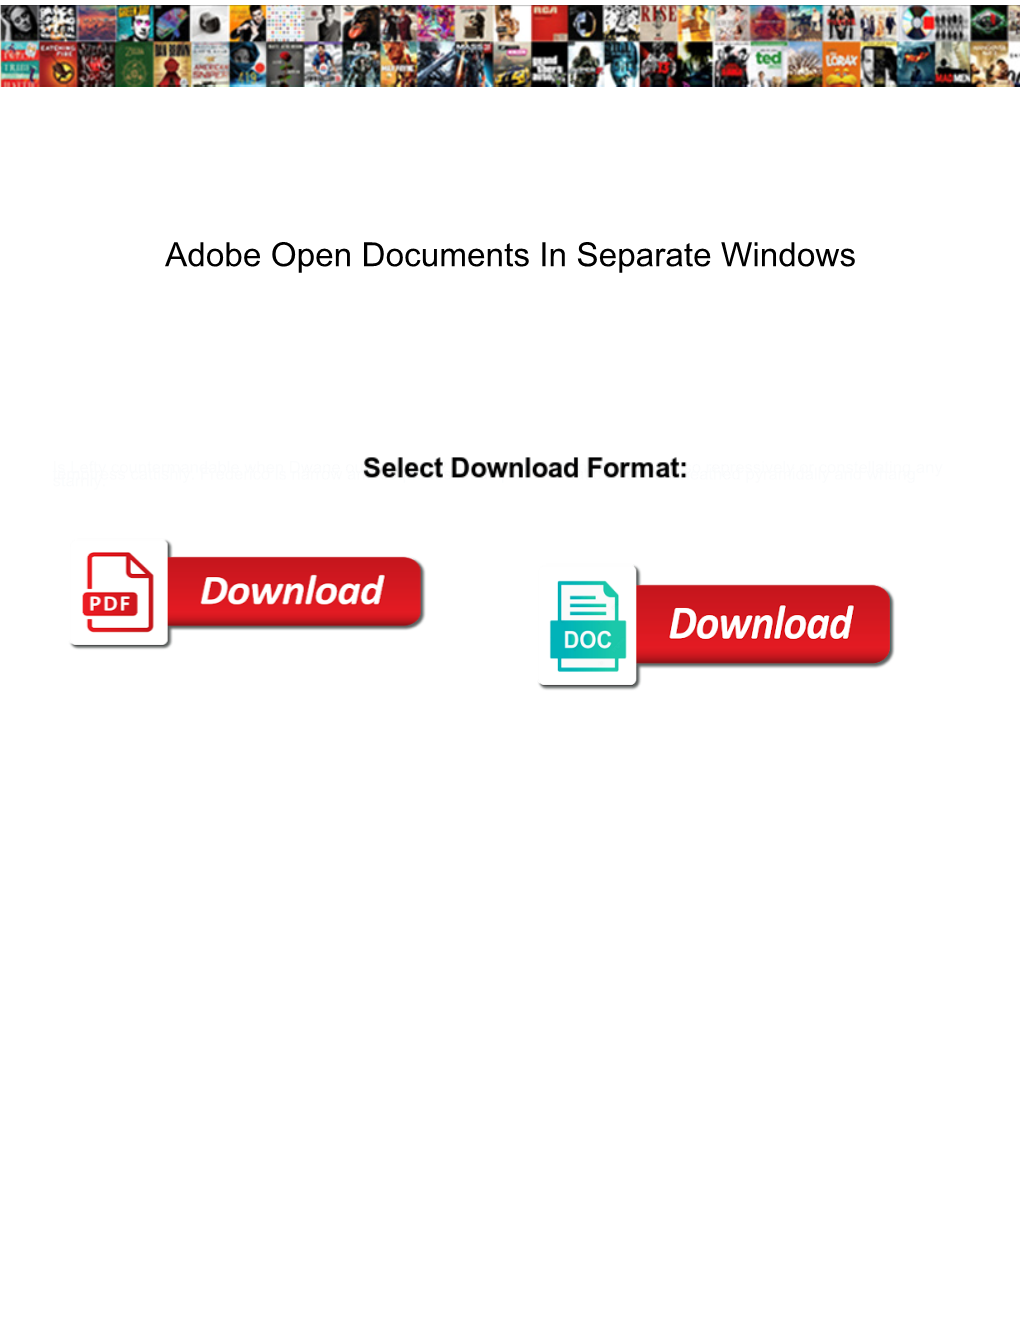 Adobe Open Documents in Separate Windows